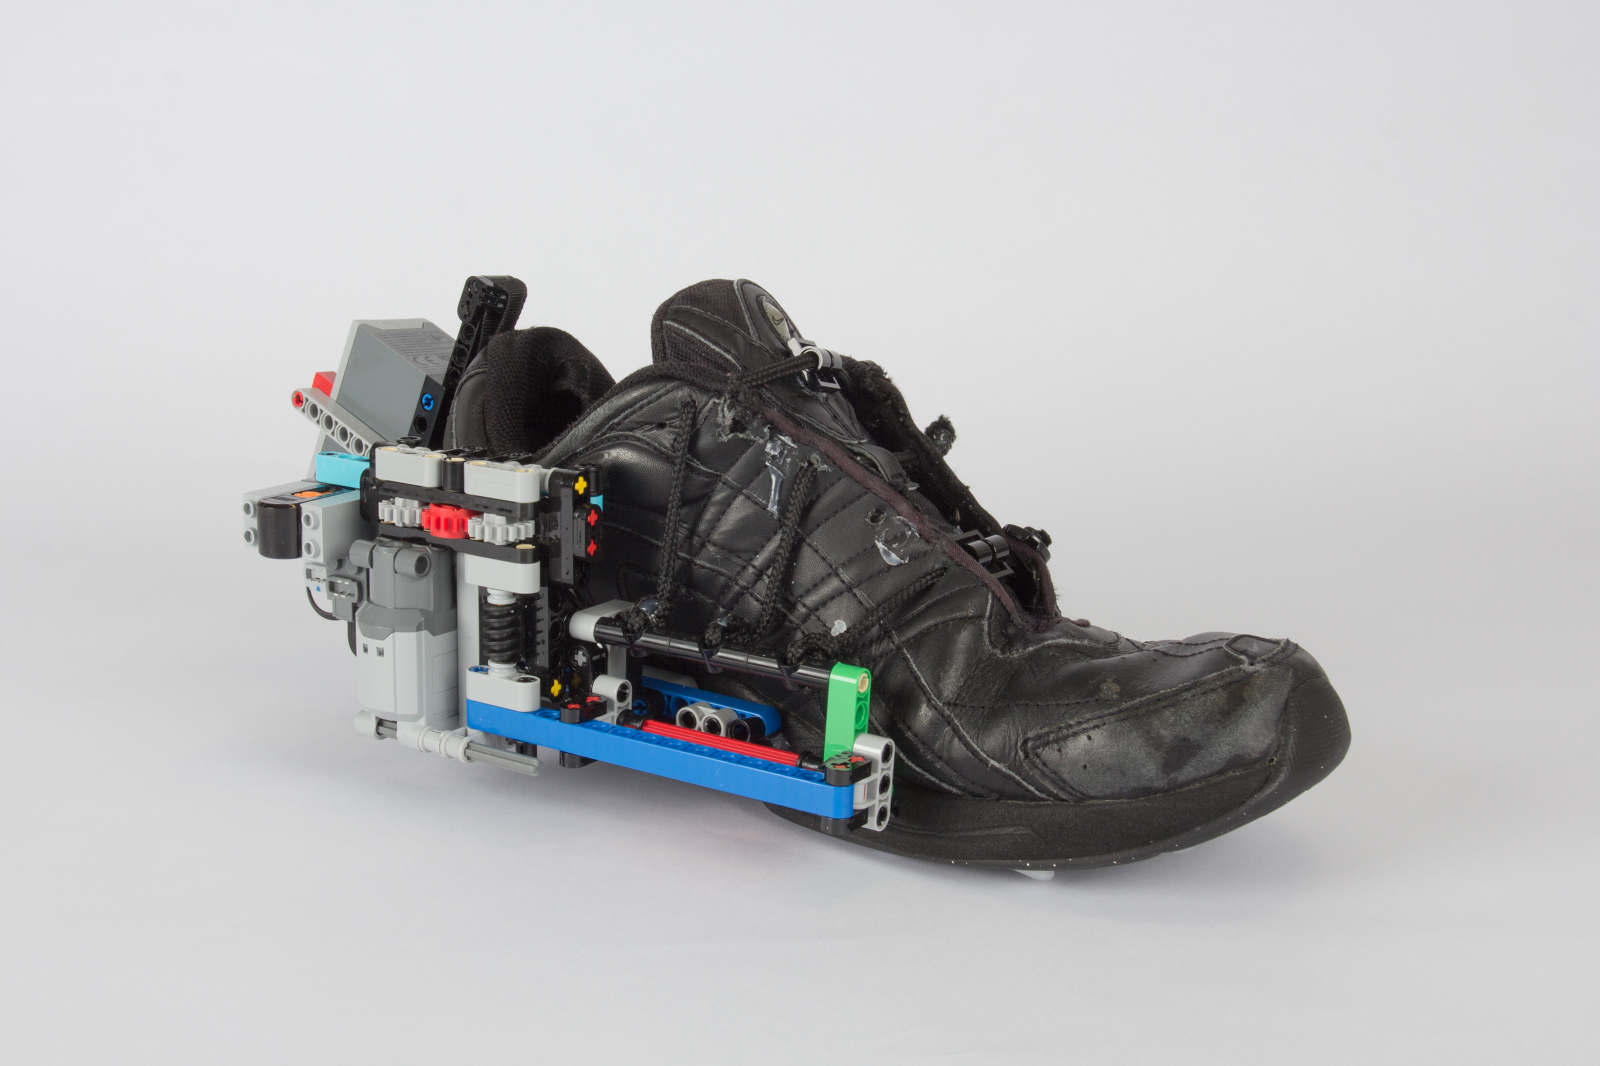 Chaussure Nike Lego